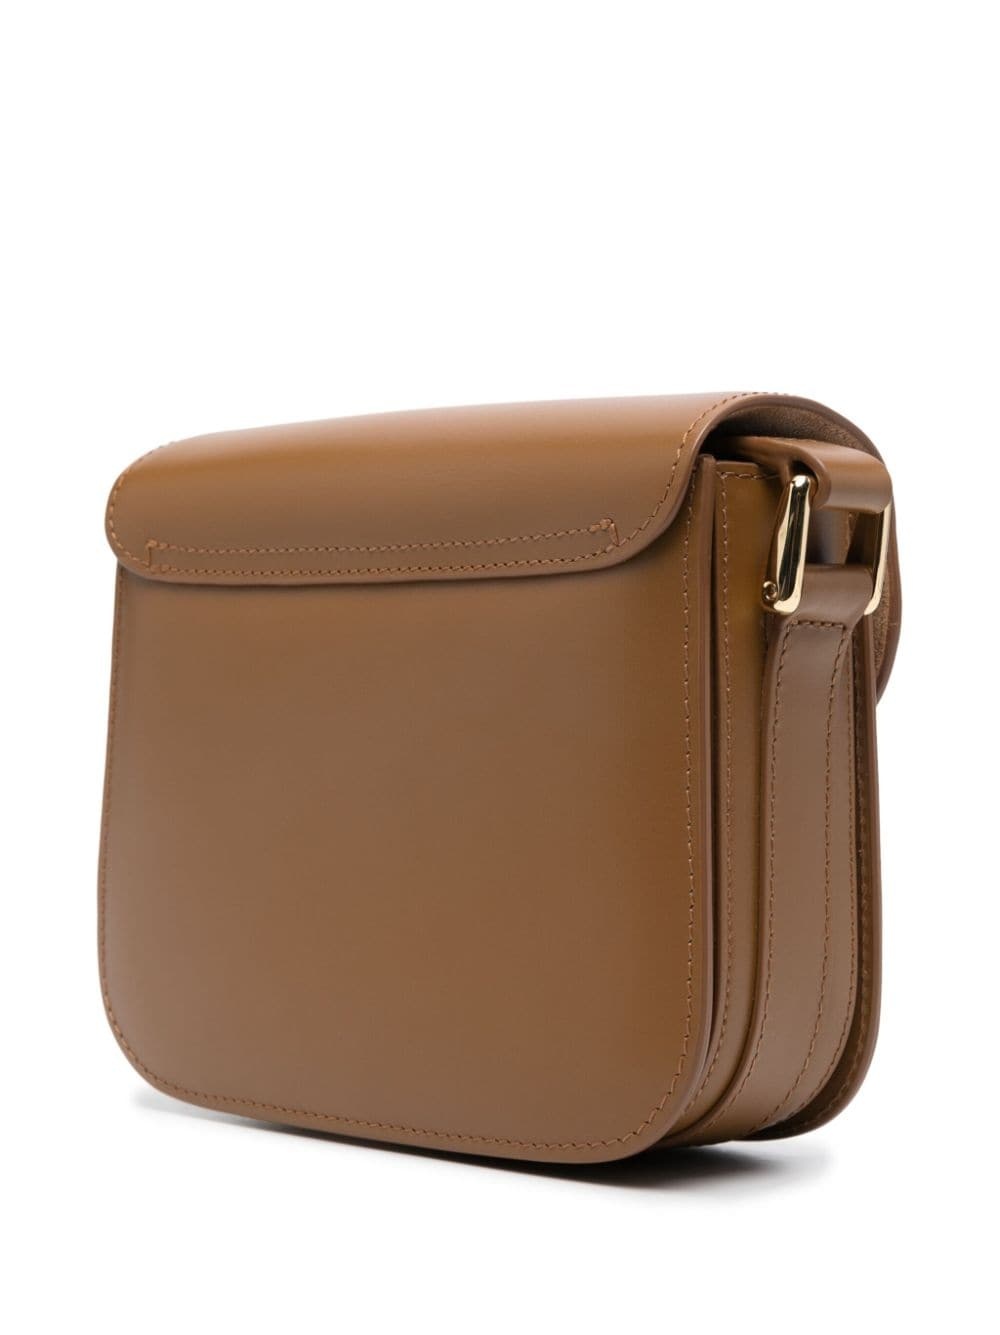 Grace leather mini bag - 3